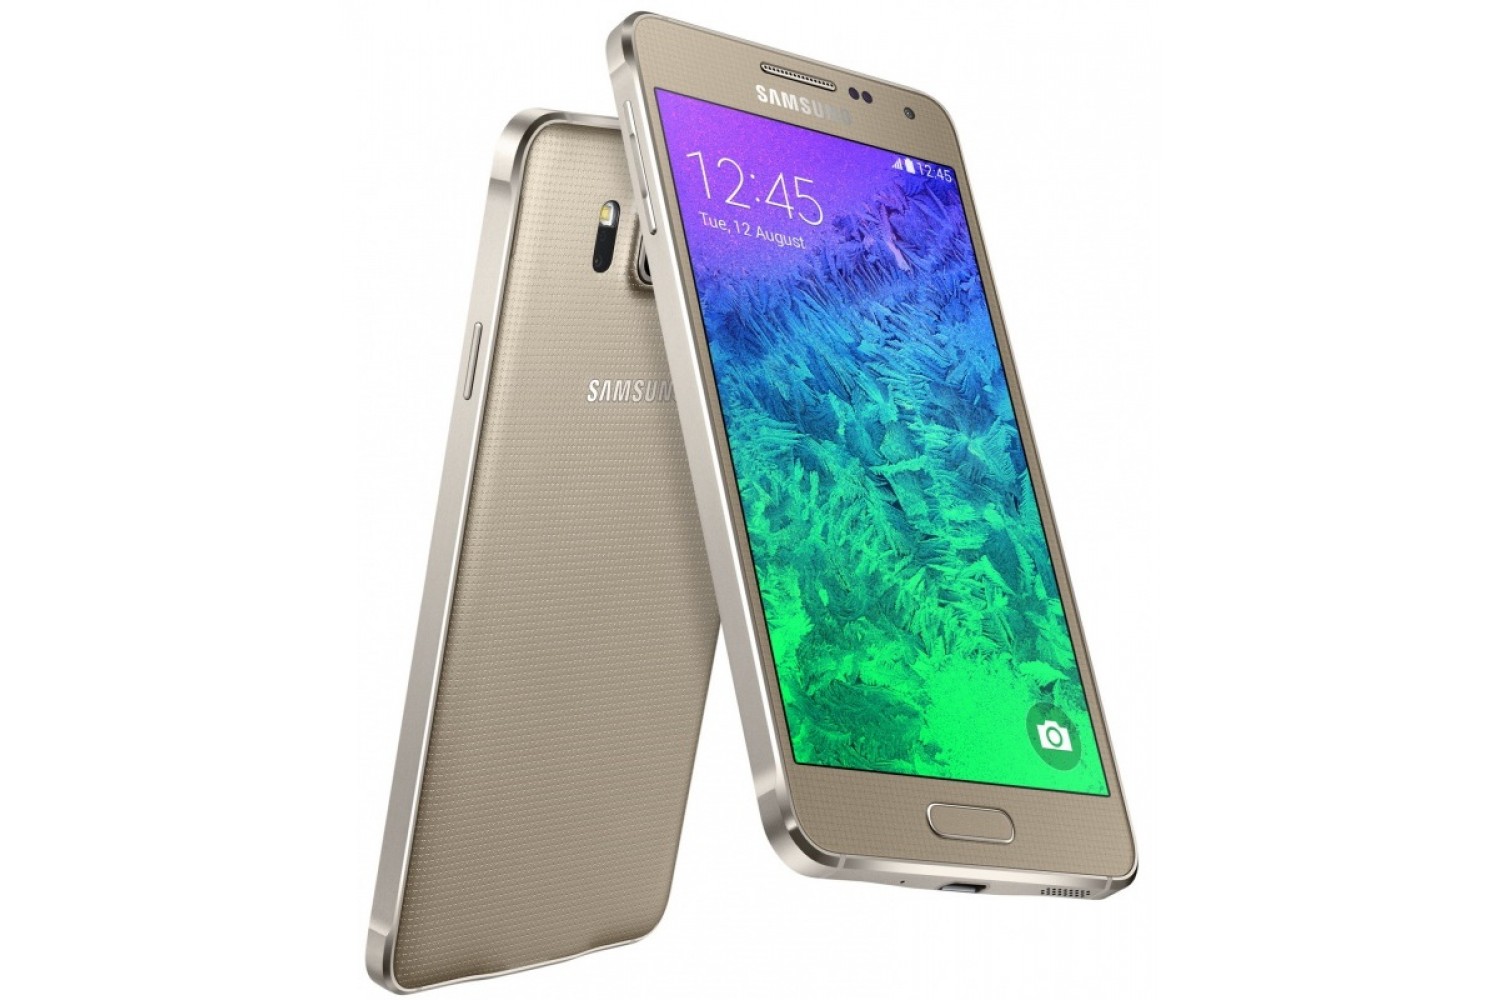 Смартфон Samsung Galaxy A51 128gb Белый